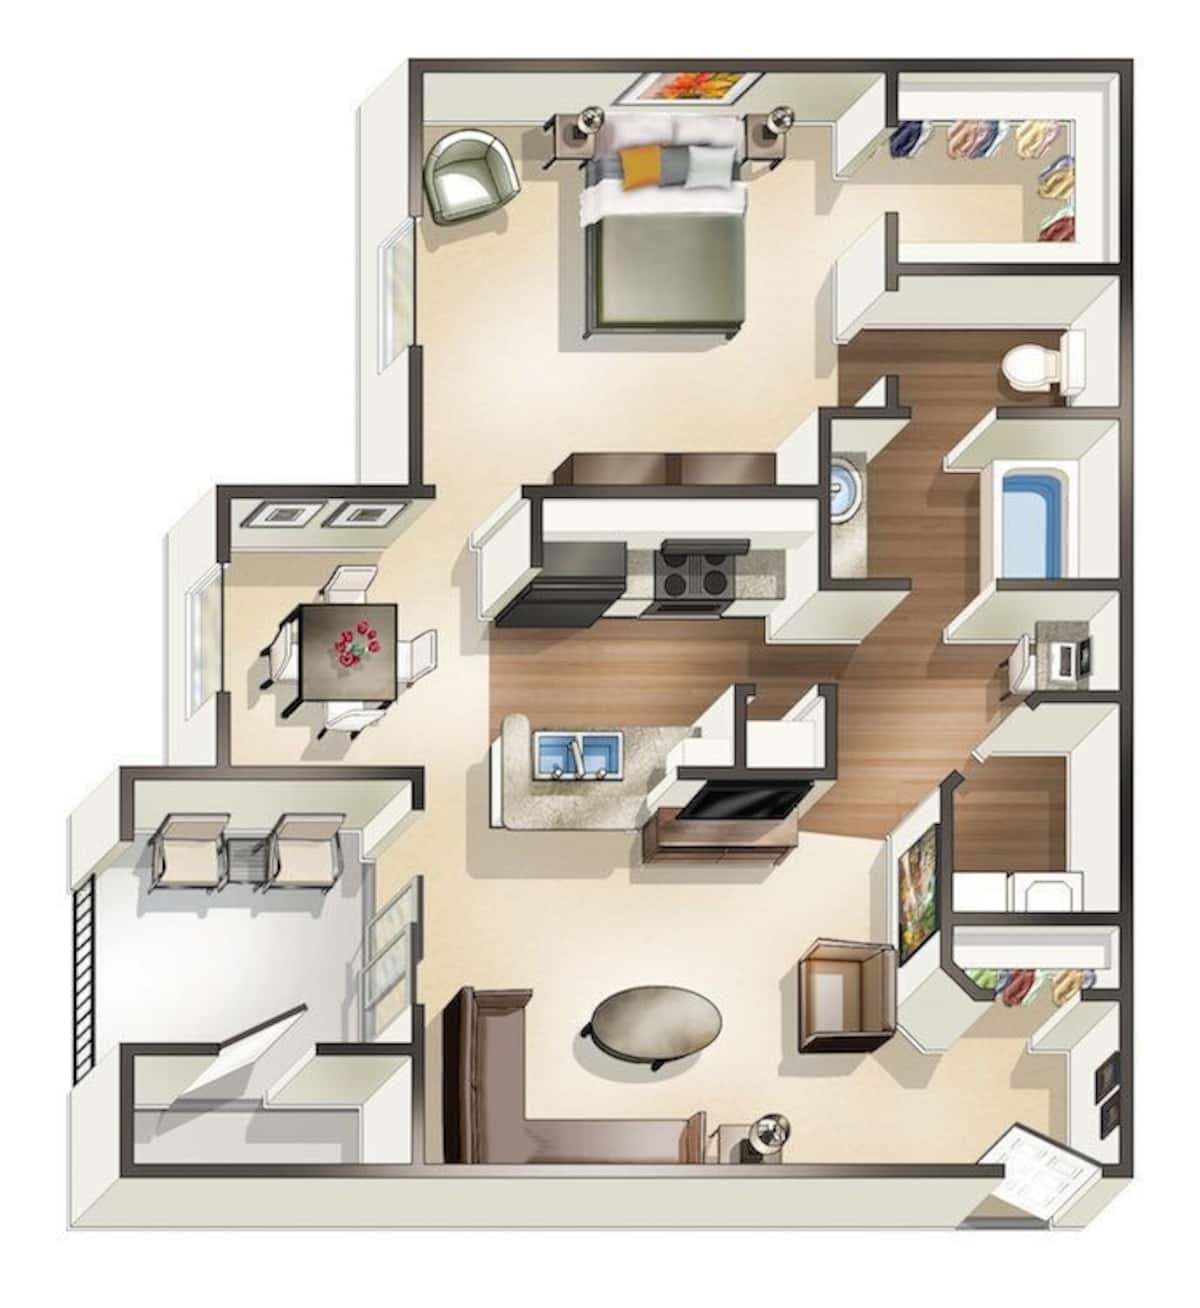 Floorplan diagram for A1C, showing 1 bedroom